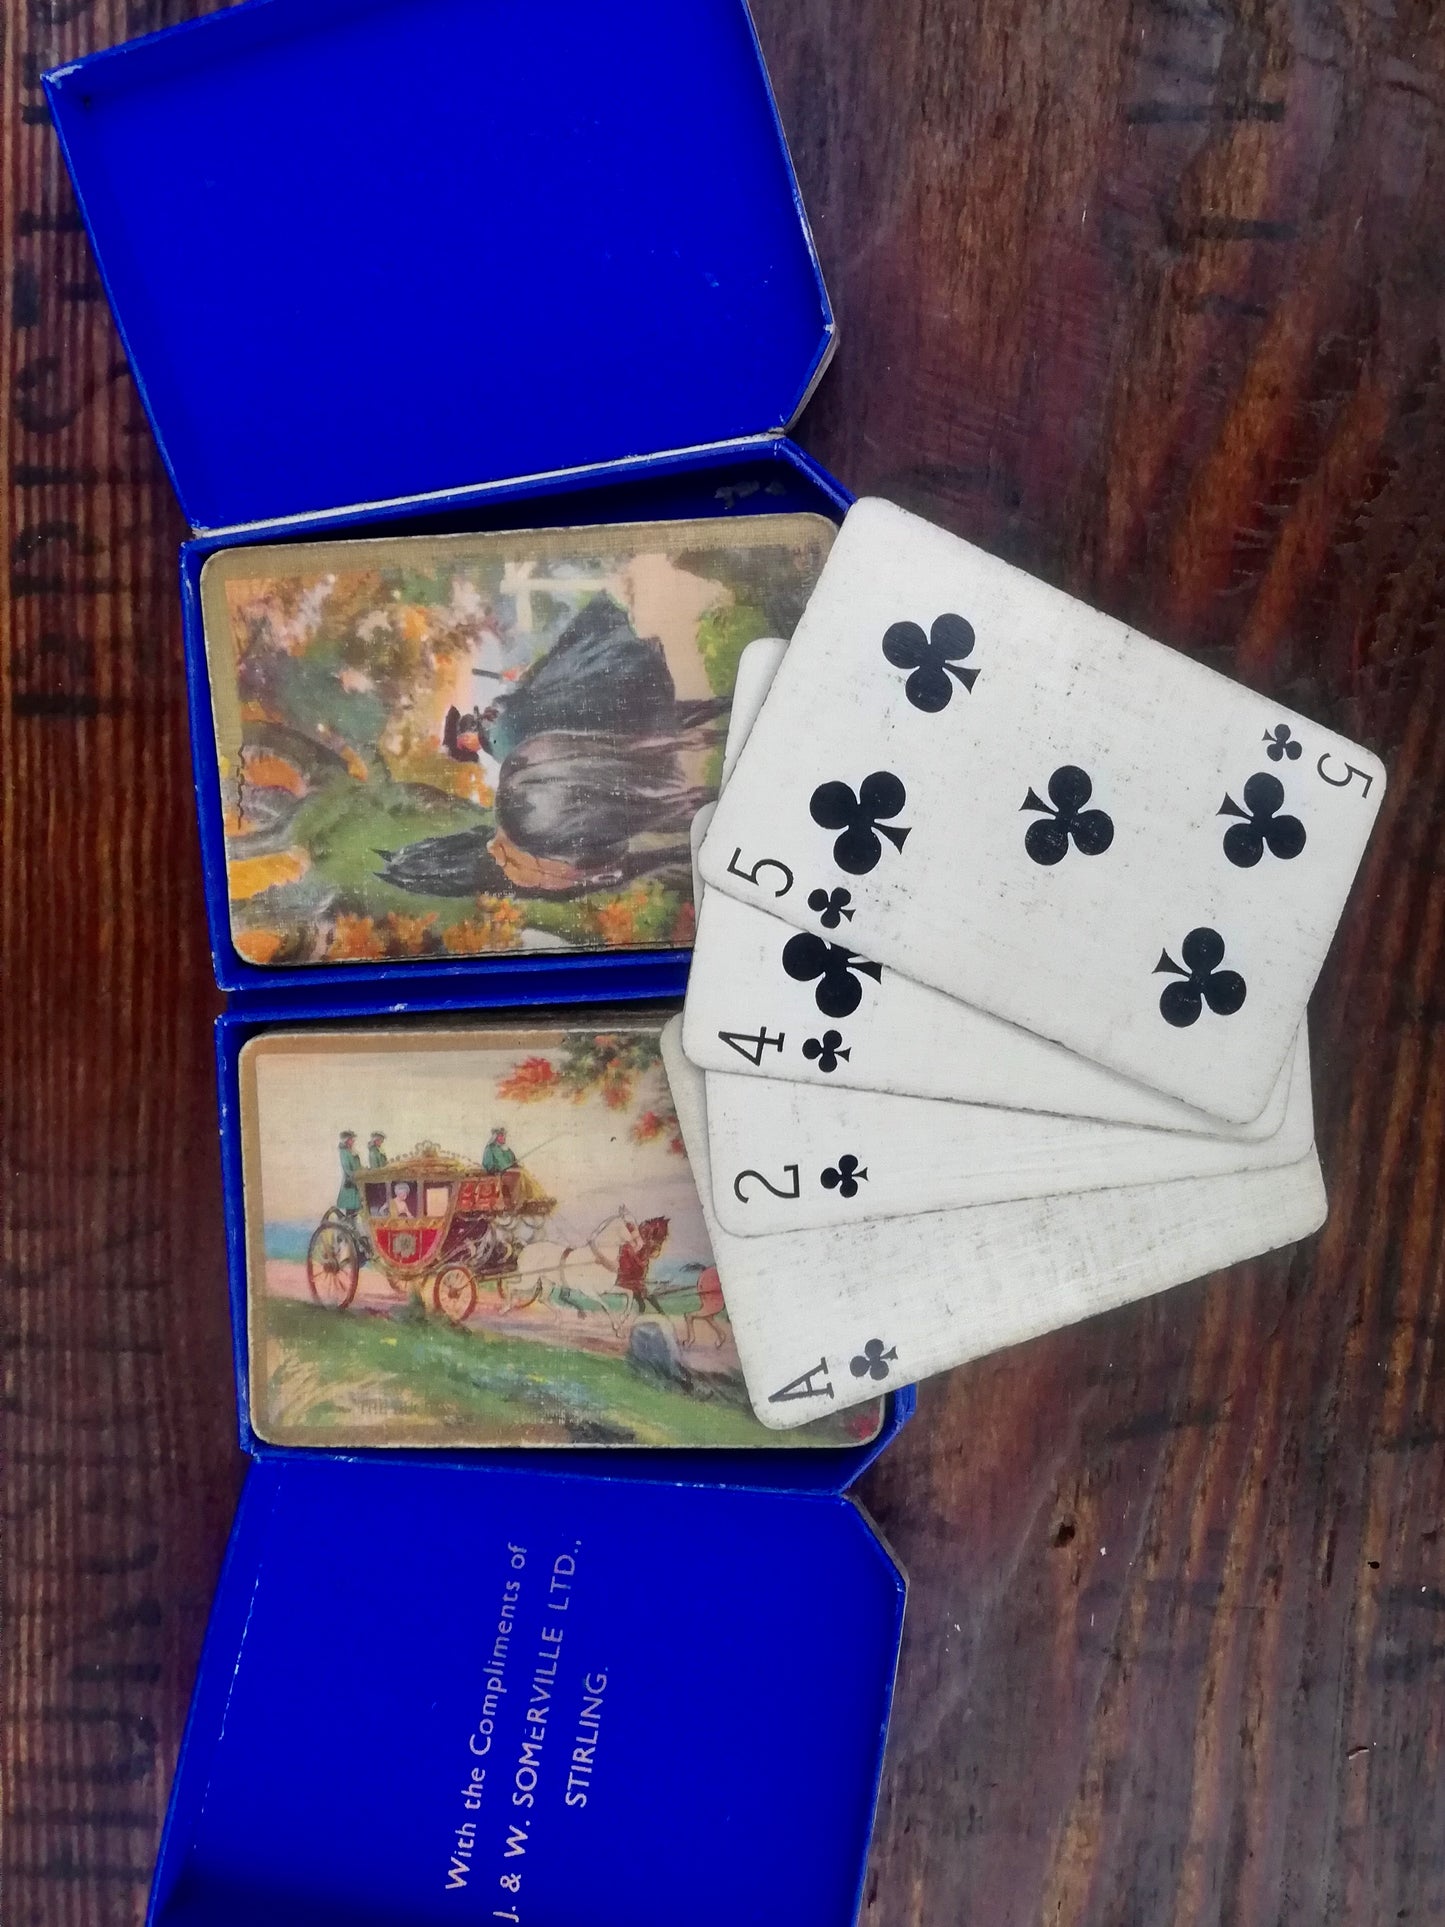 Set of 2 vintage decks of playing cards